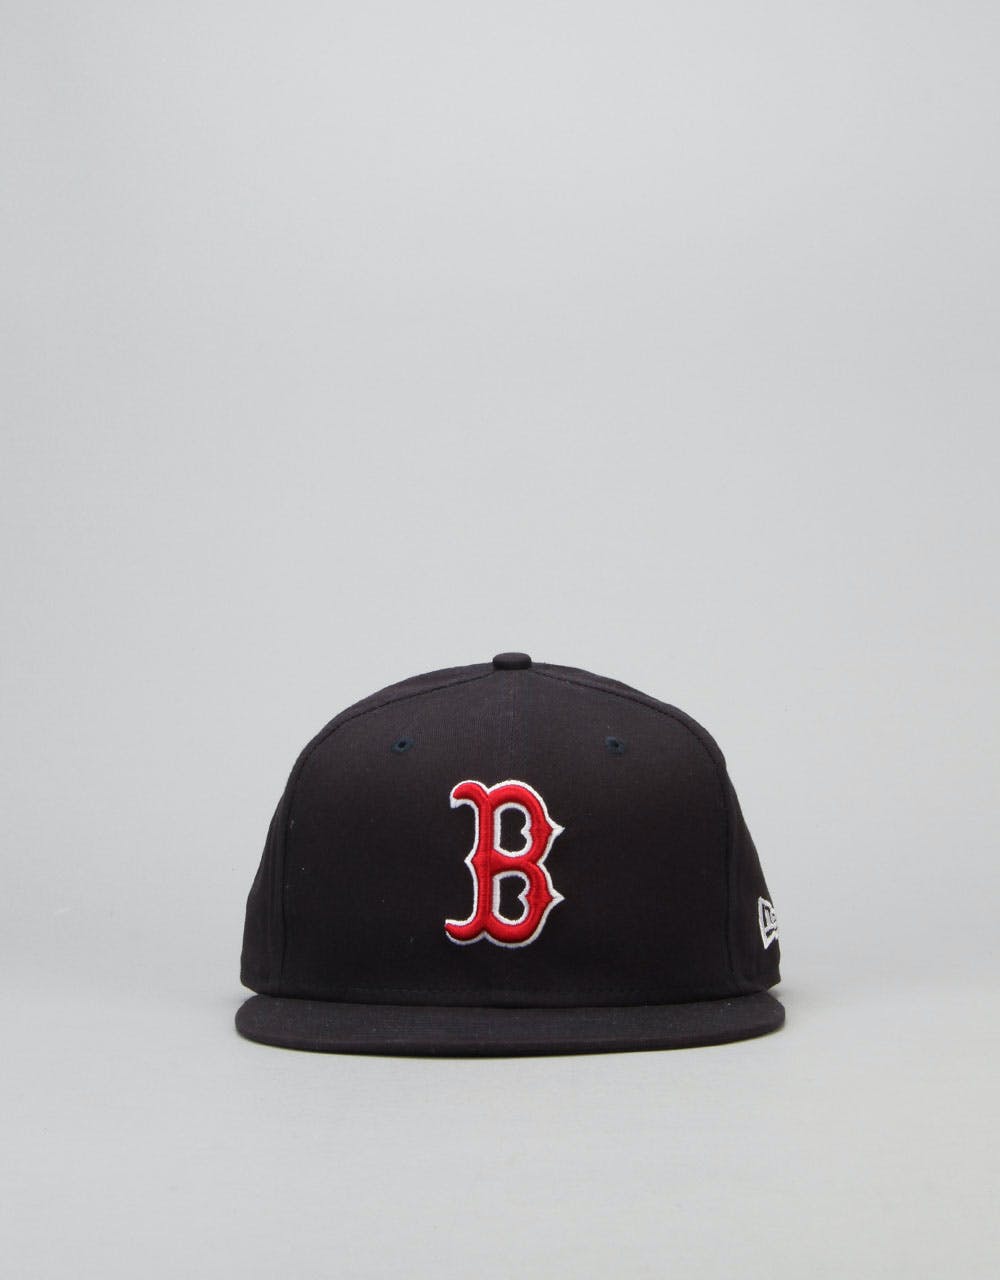 New Era 9Fifty MLB Boston Red Sox Snapback Cap - Navy/Red/White